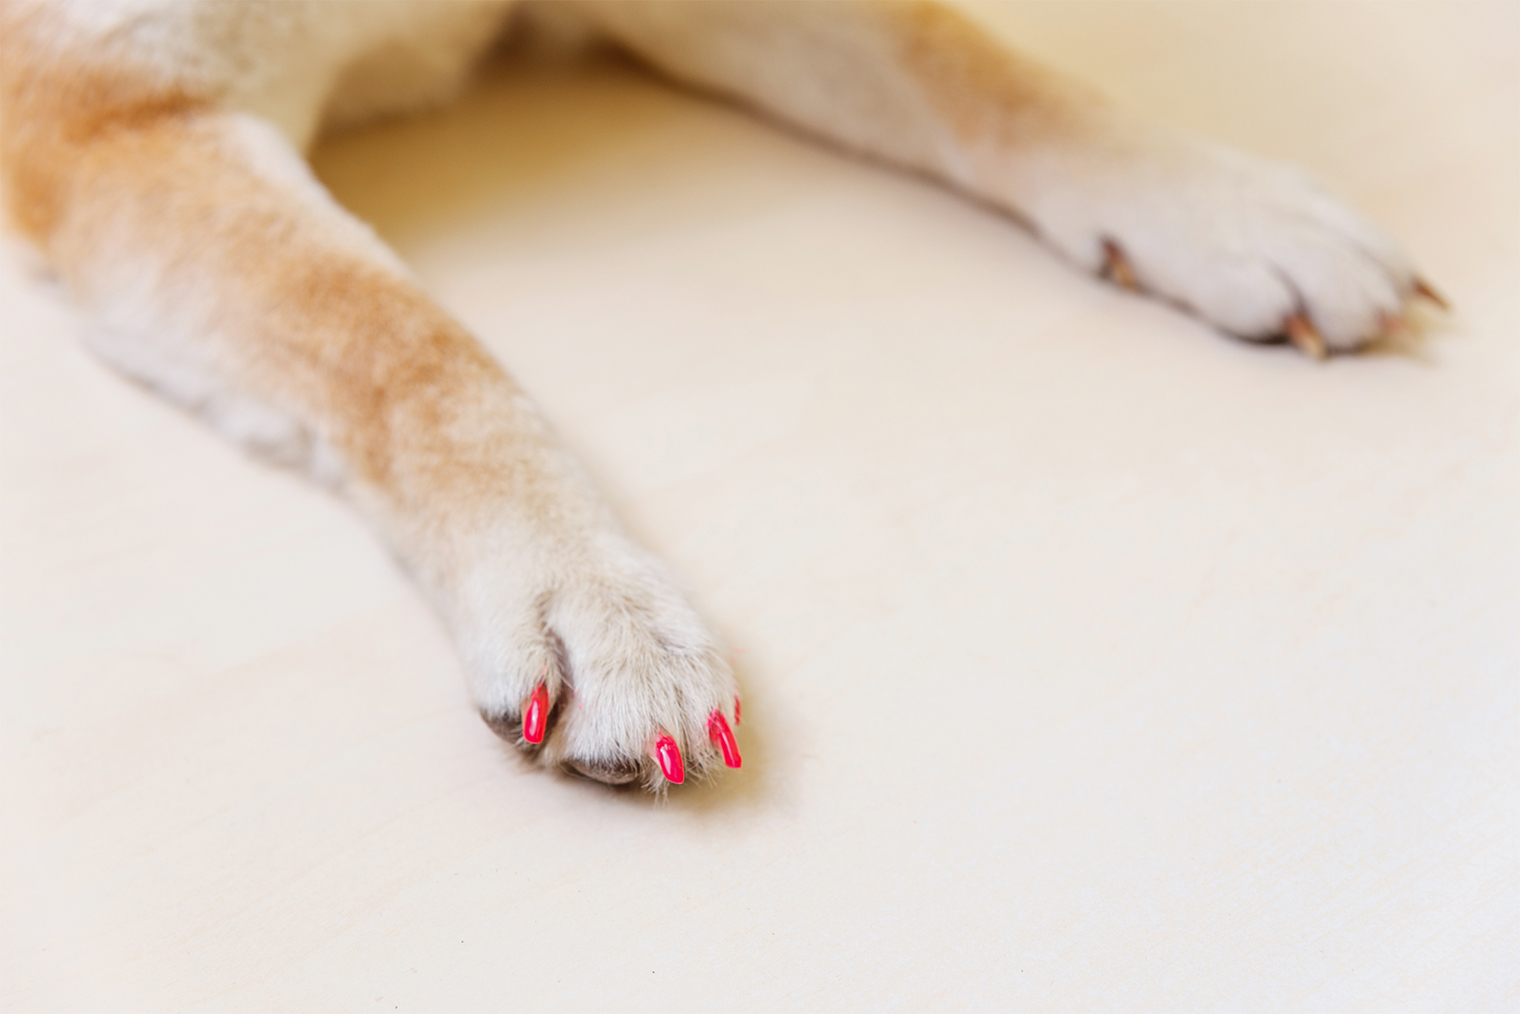 Окрашивание когтей сиба⁠-⁠ину. Фотография: BY⁠-⁠_⁠-⁠BY / Shutterstock